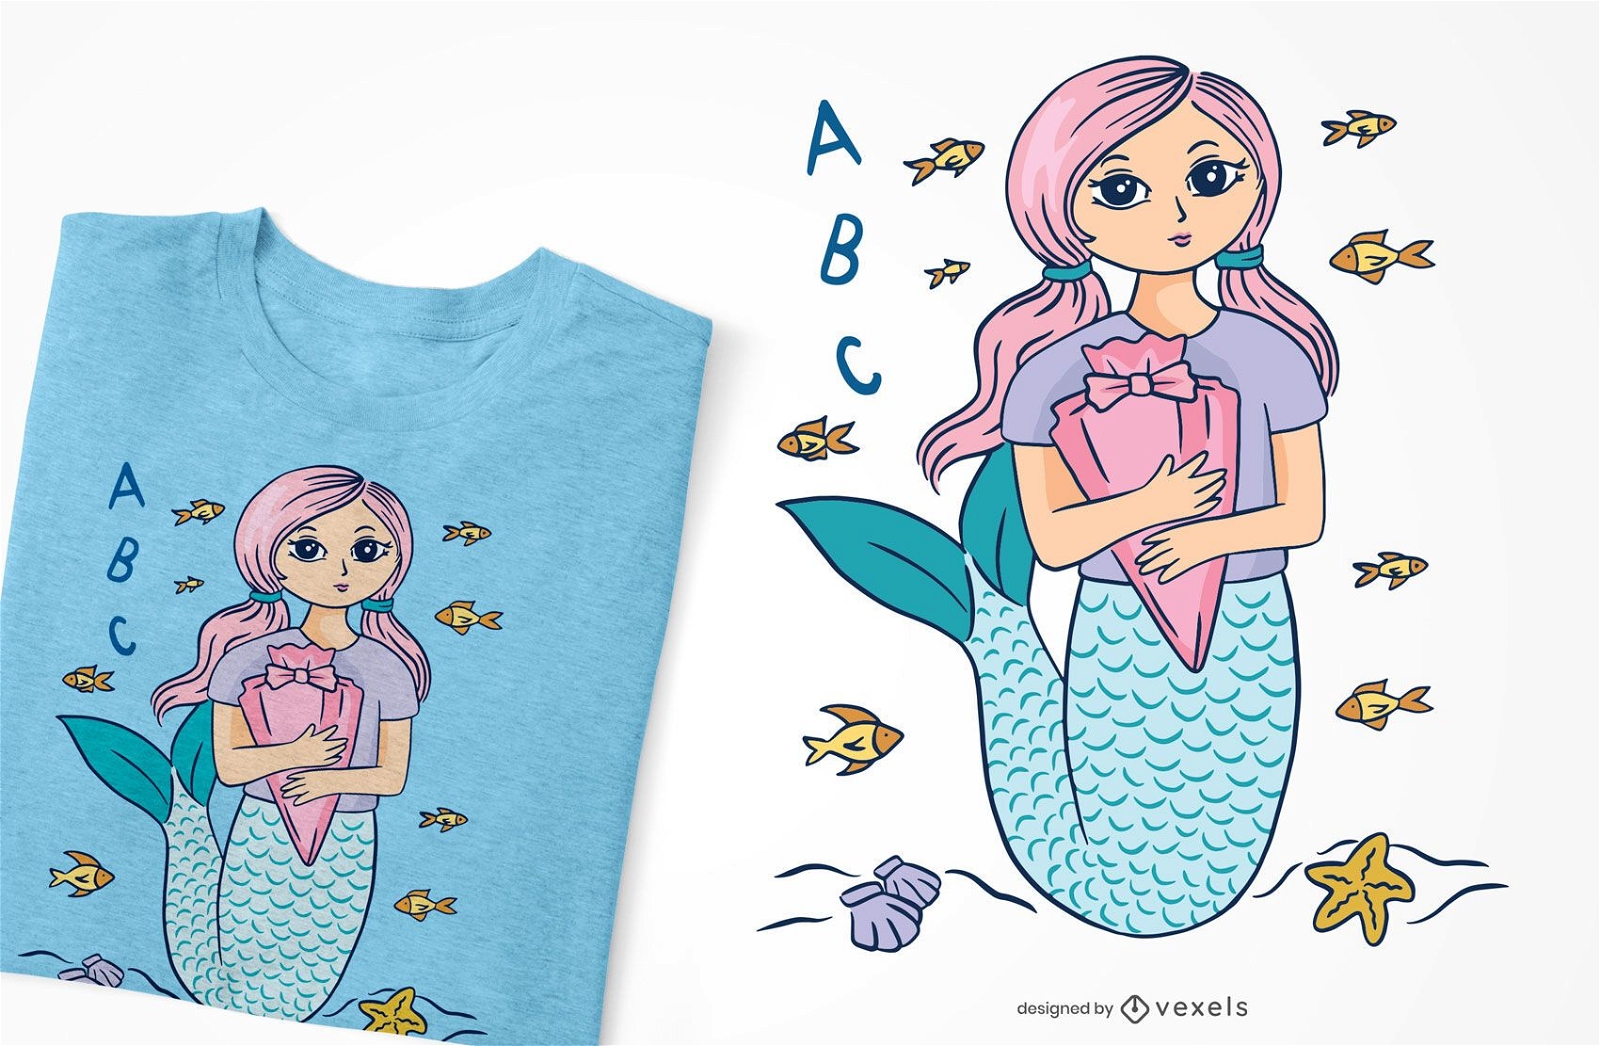 School mermaid t-shirt design